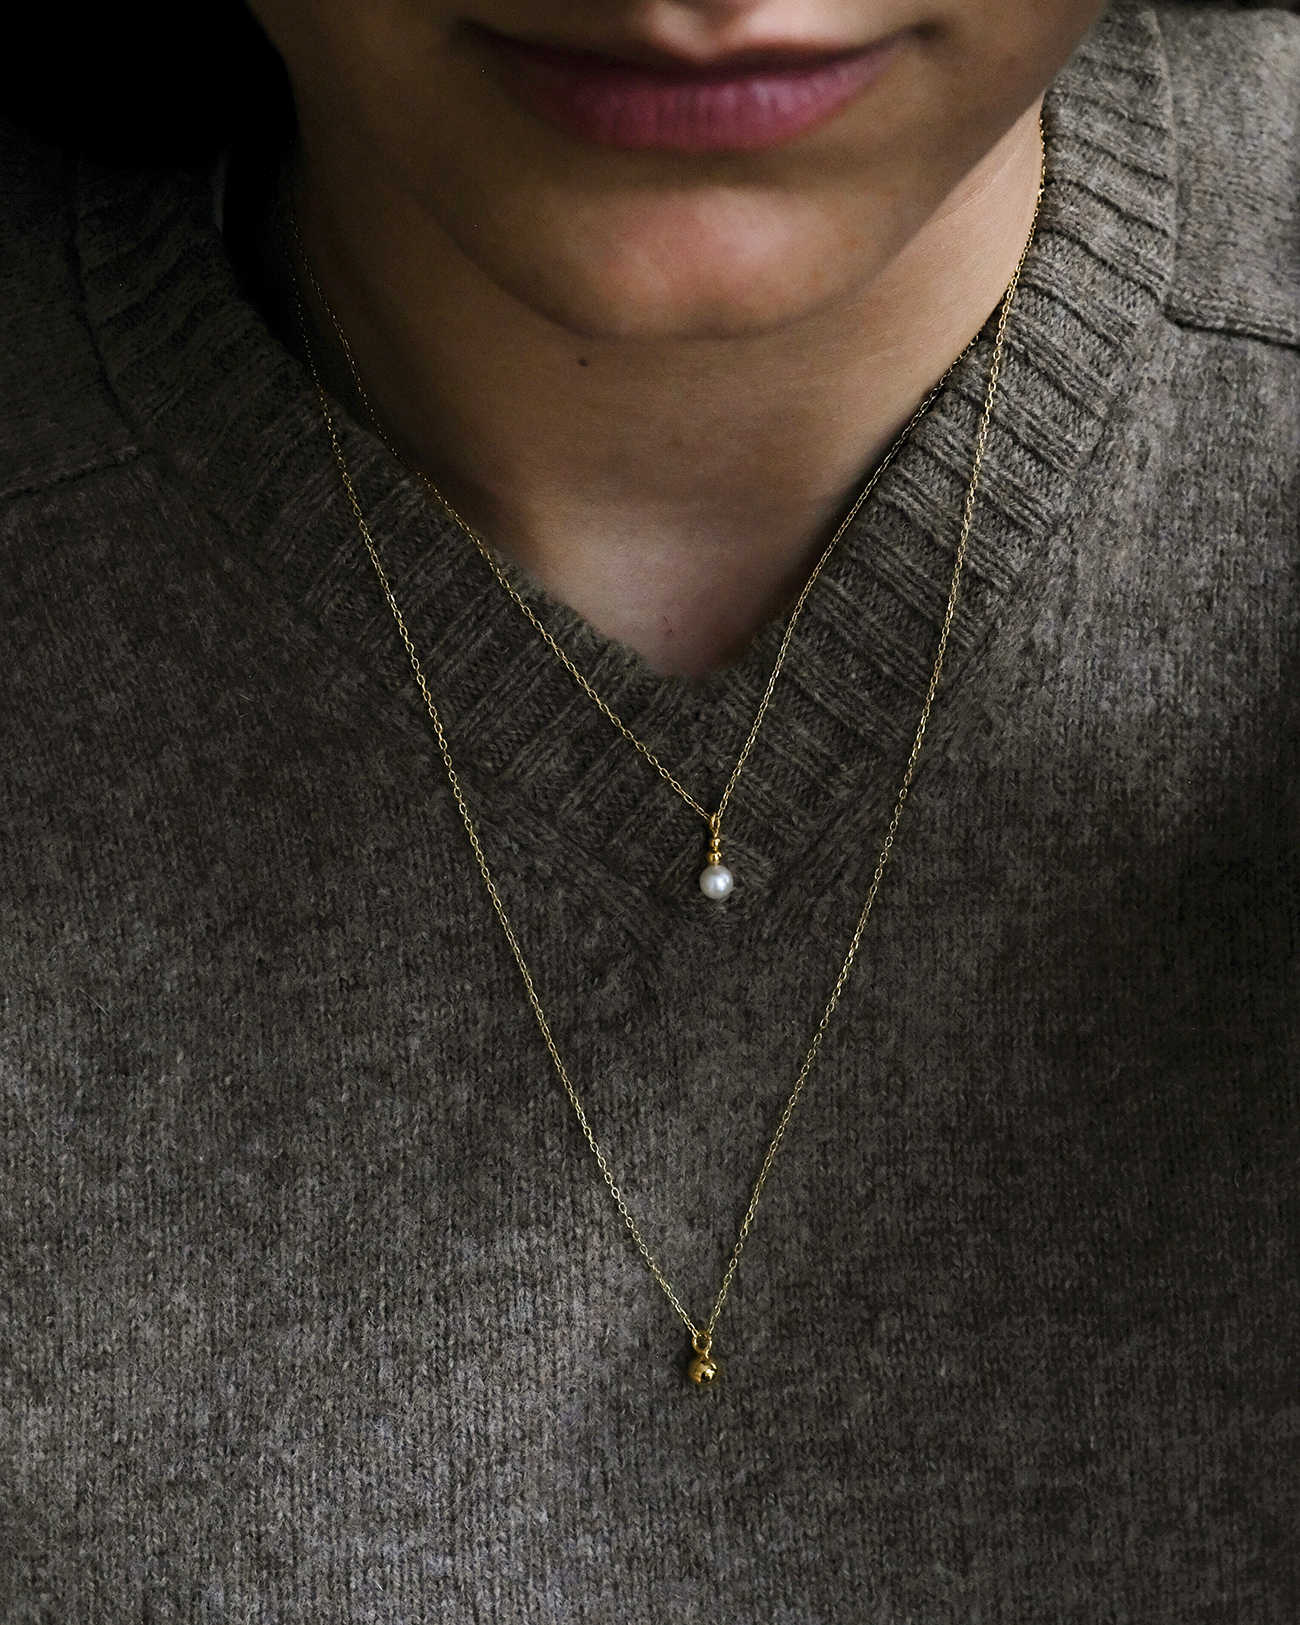 metaformi_design_jewelry_gold_ball_necklace